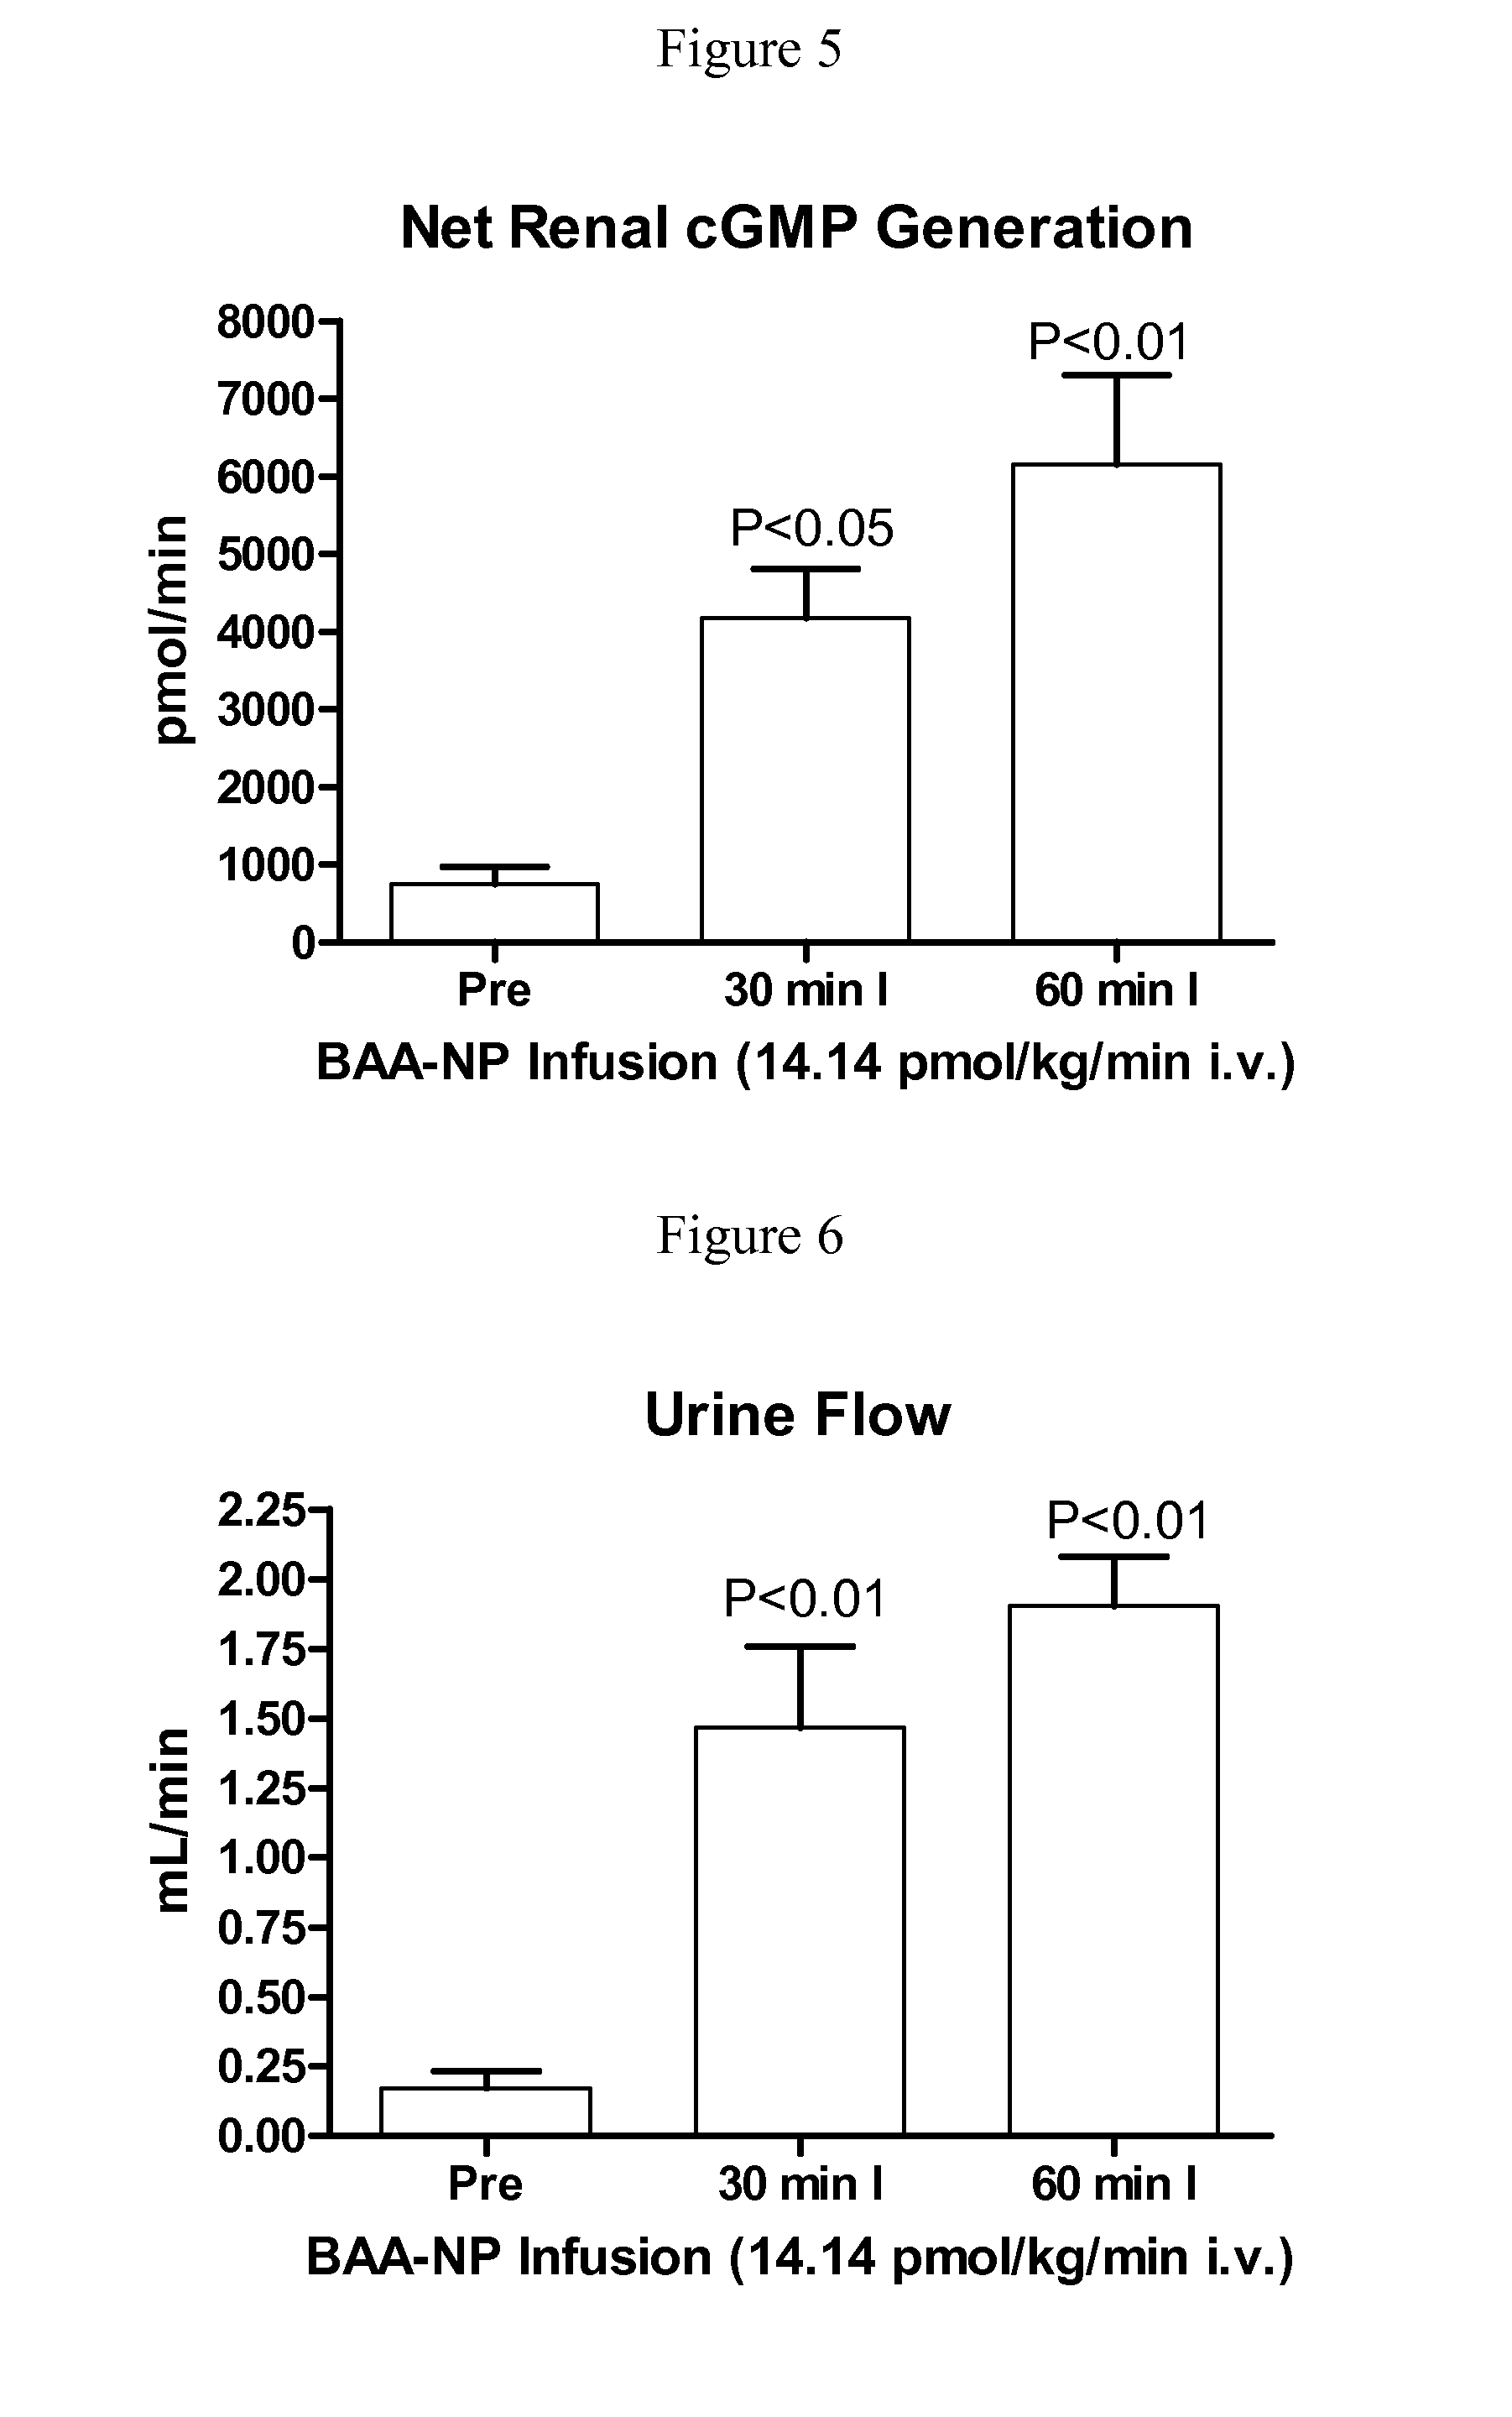 Chimeric natriuretic polypeptides with unique pharmacologic profiles